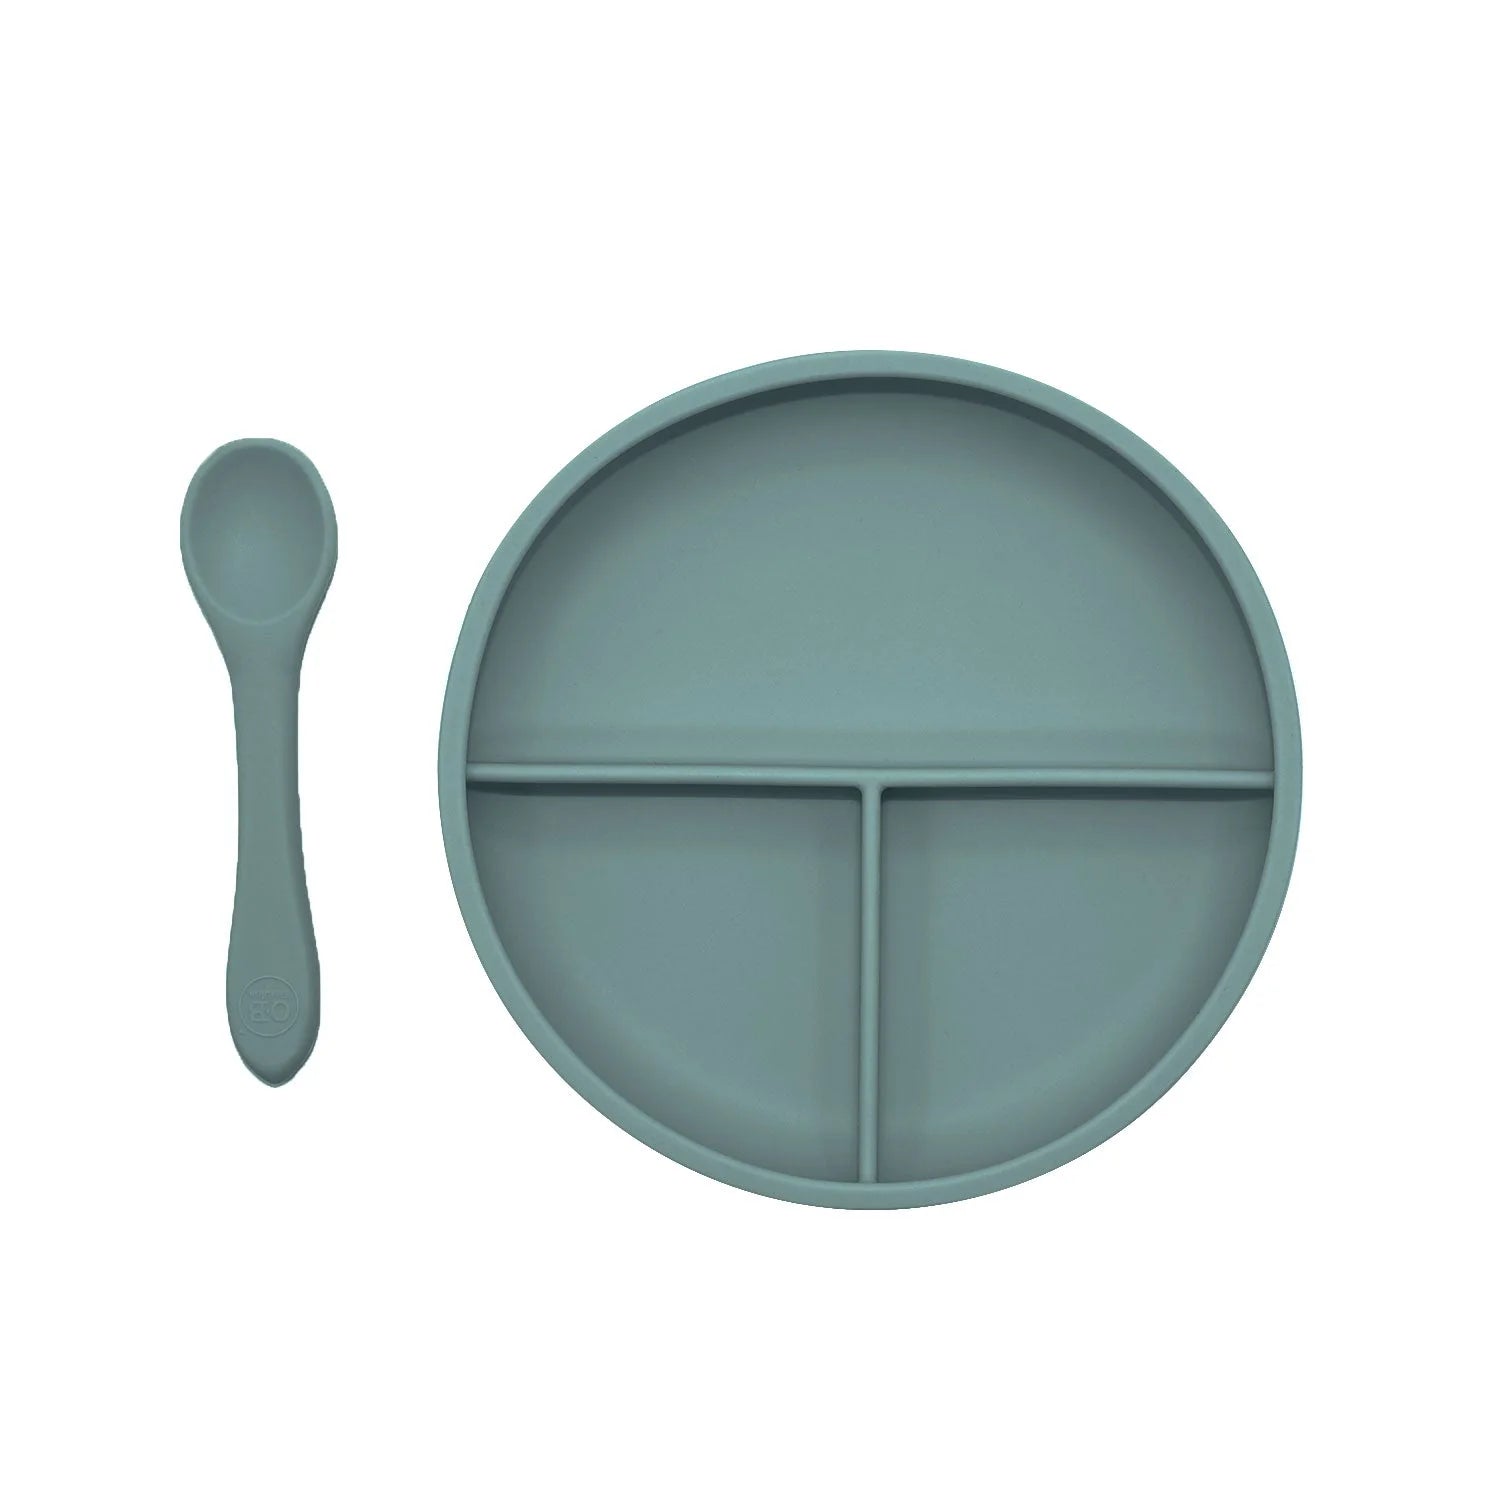 O.B Designs Suction Divider Plate & Spoon Set - Ocean